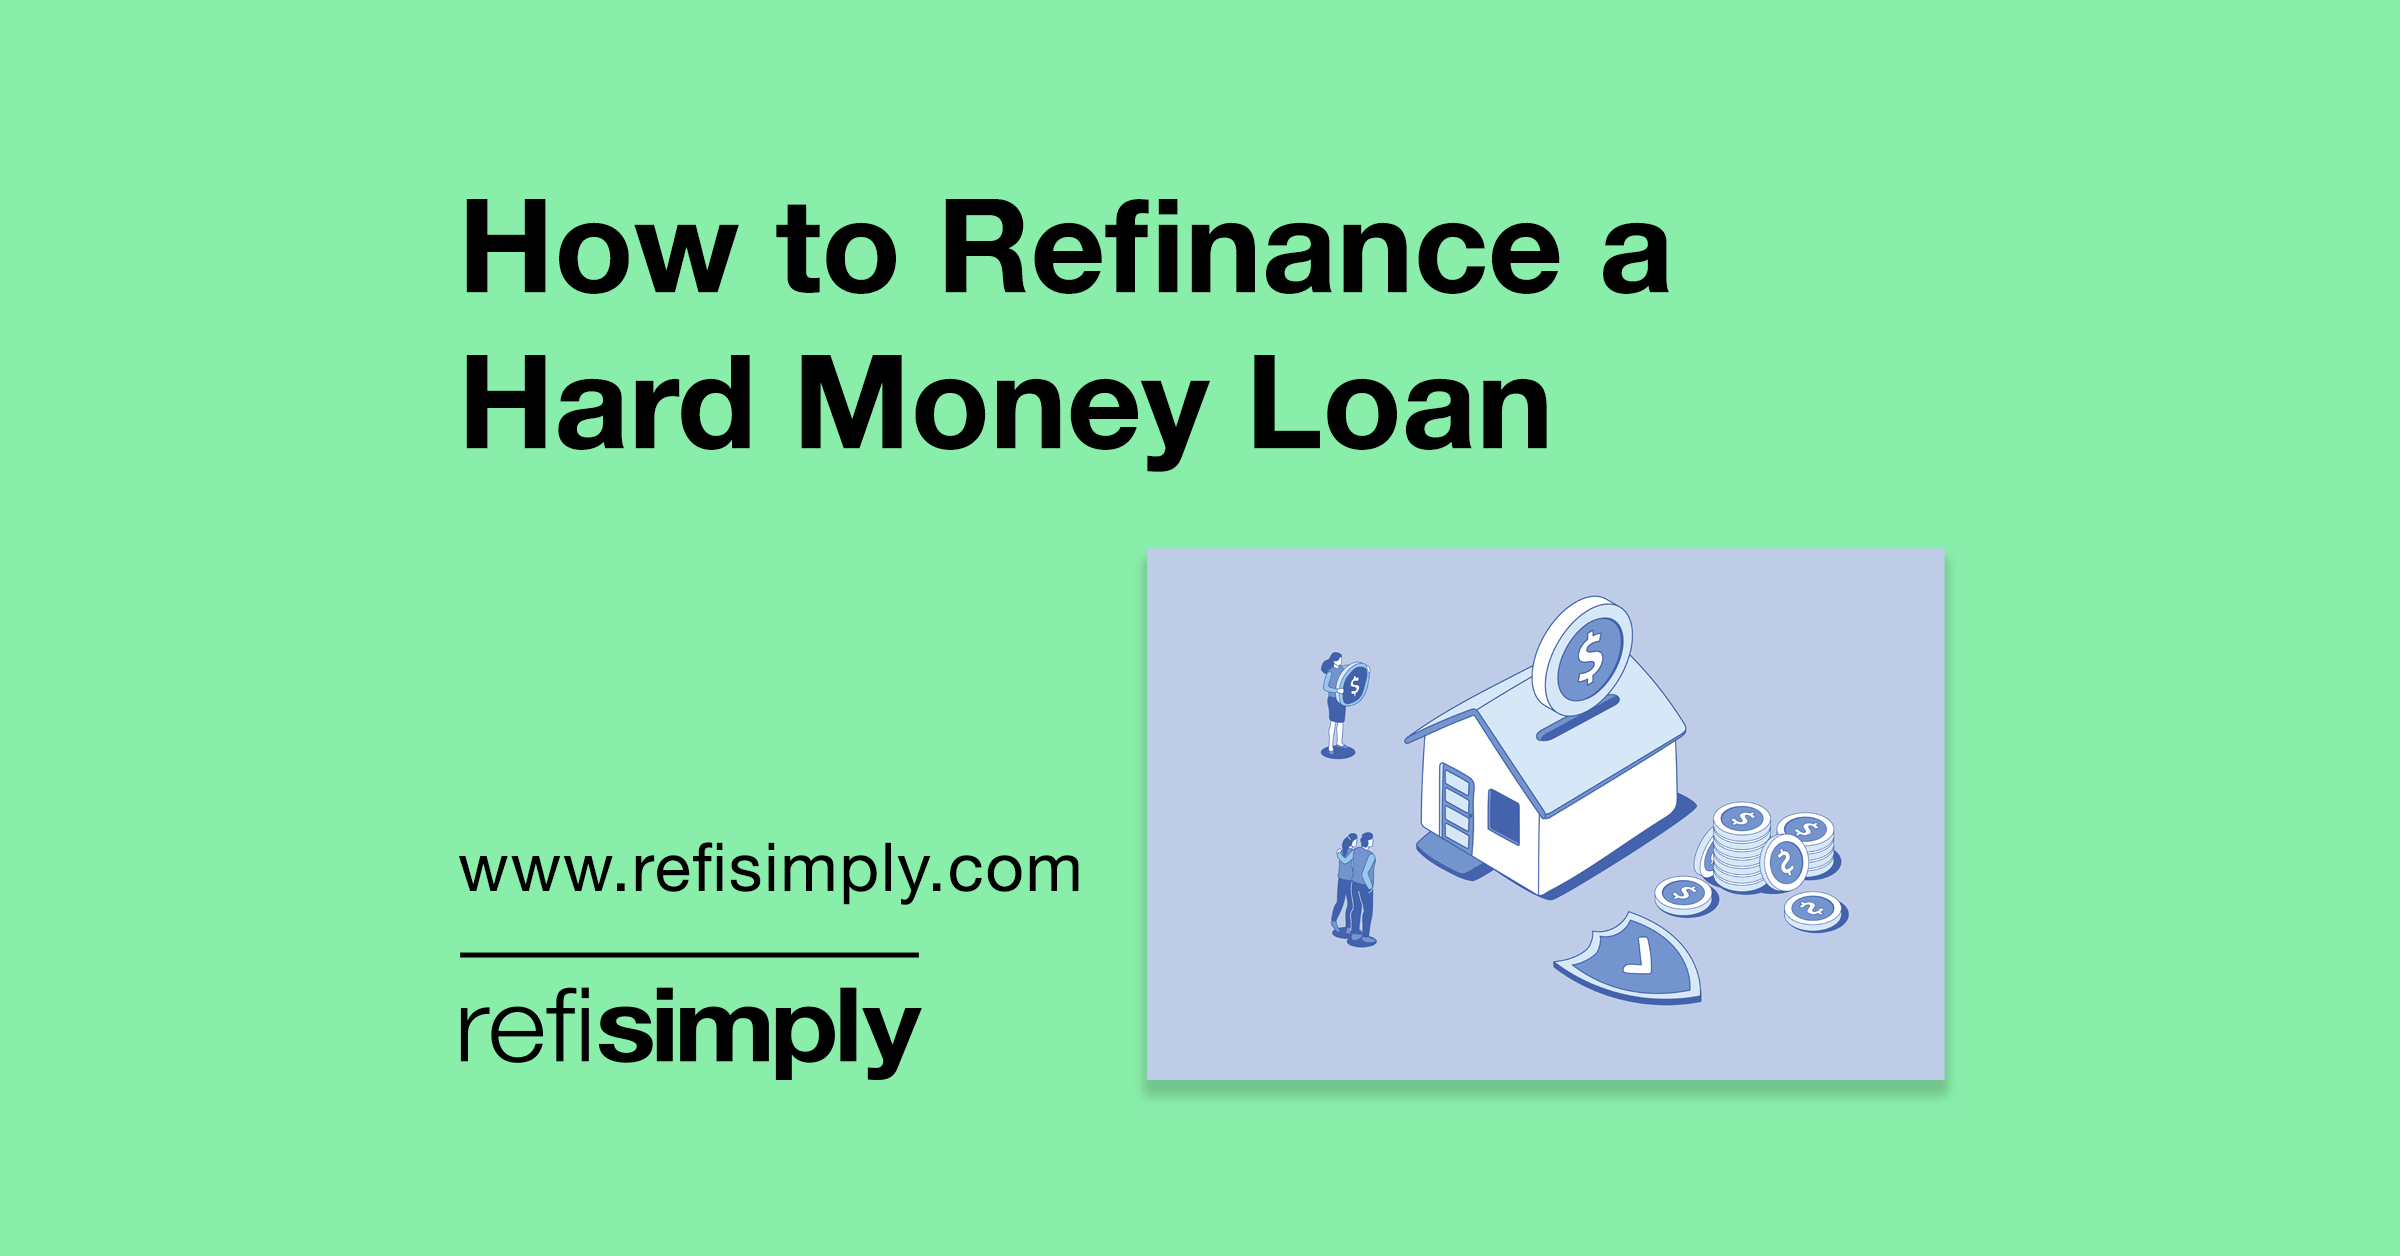 How to Refinance a Hard Money Loan